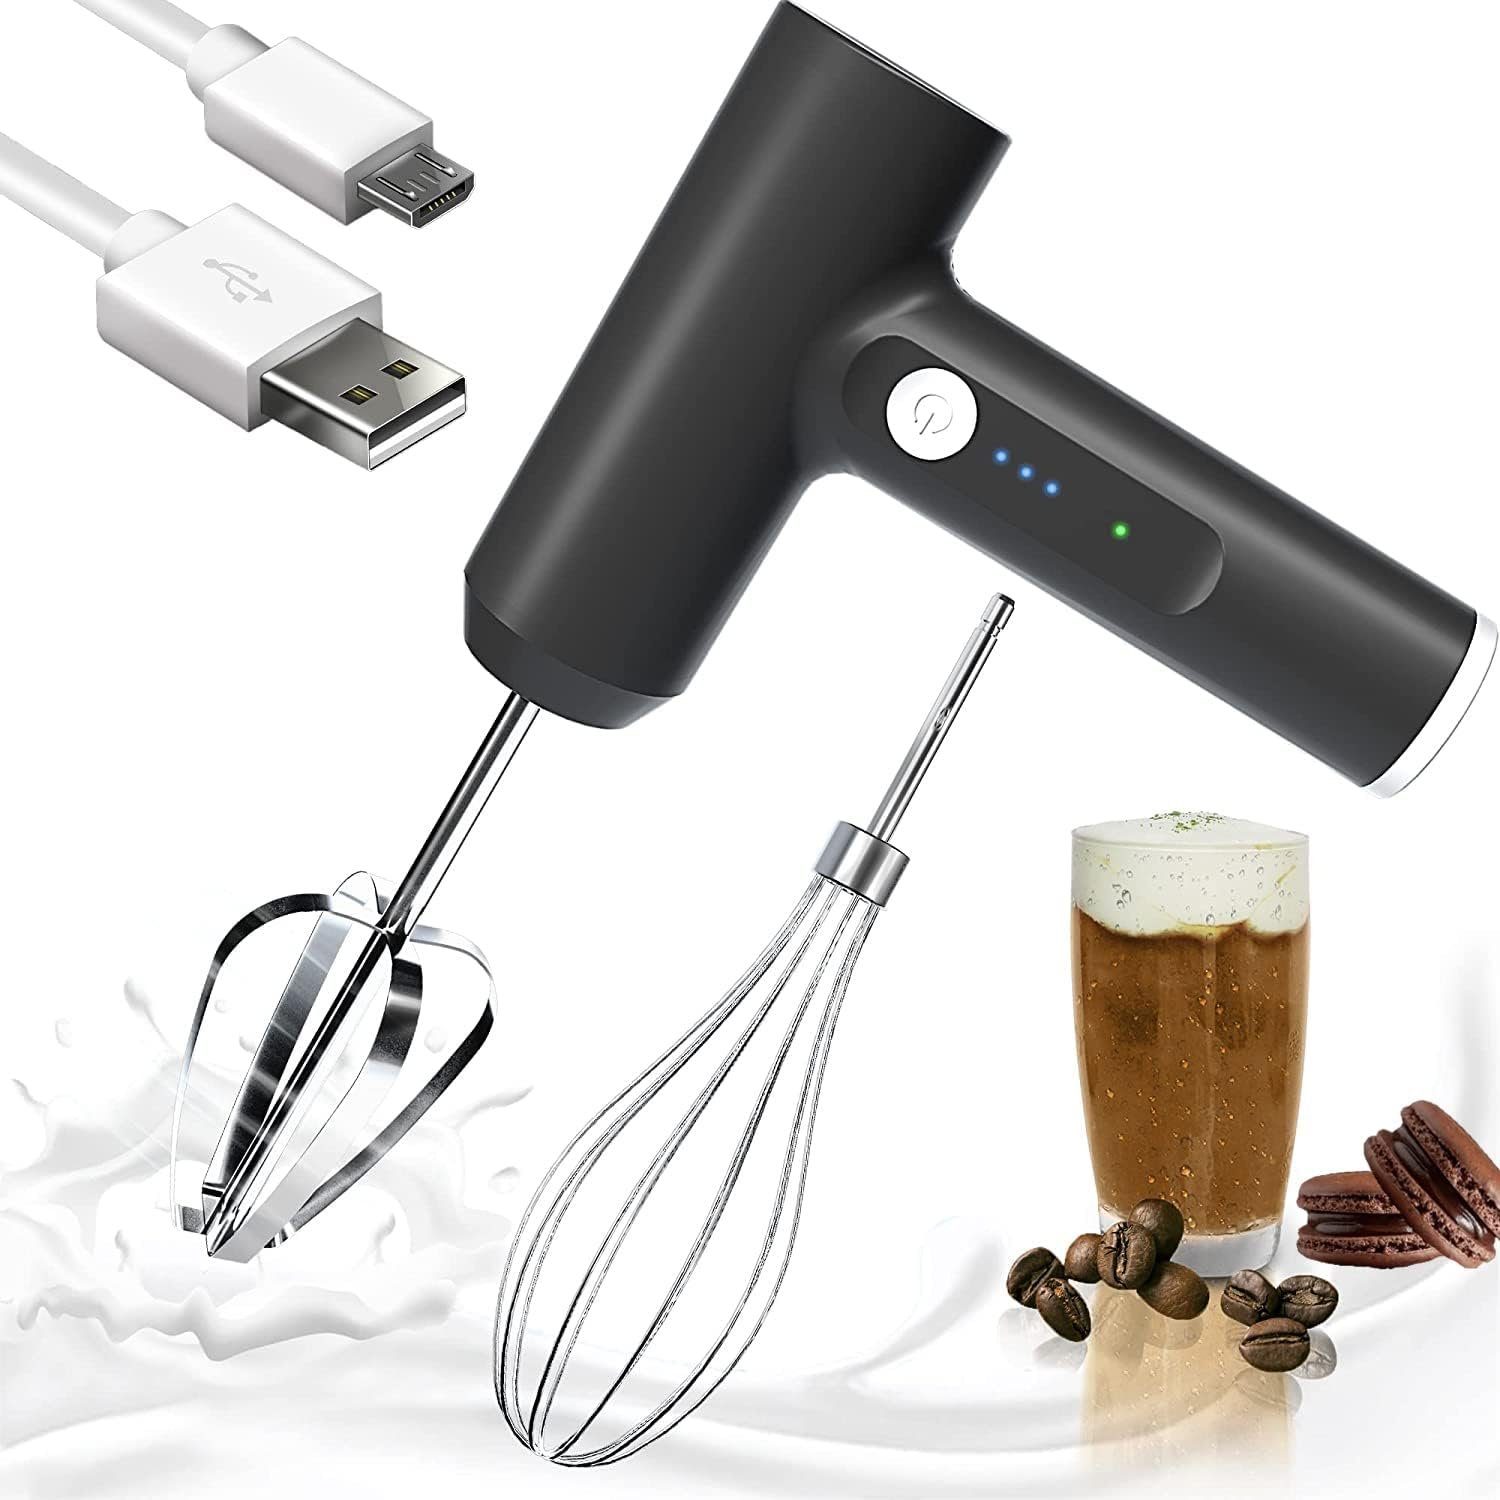 Bedee Handmixer Kabellos Handmixer Elektrische Handrührgerät,USB  Wiederaufladbar, Tragbarer Mixer Handrührer elektrischer schneebesen für  Kuchenen